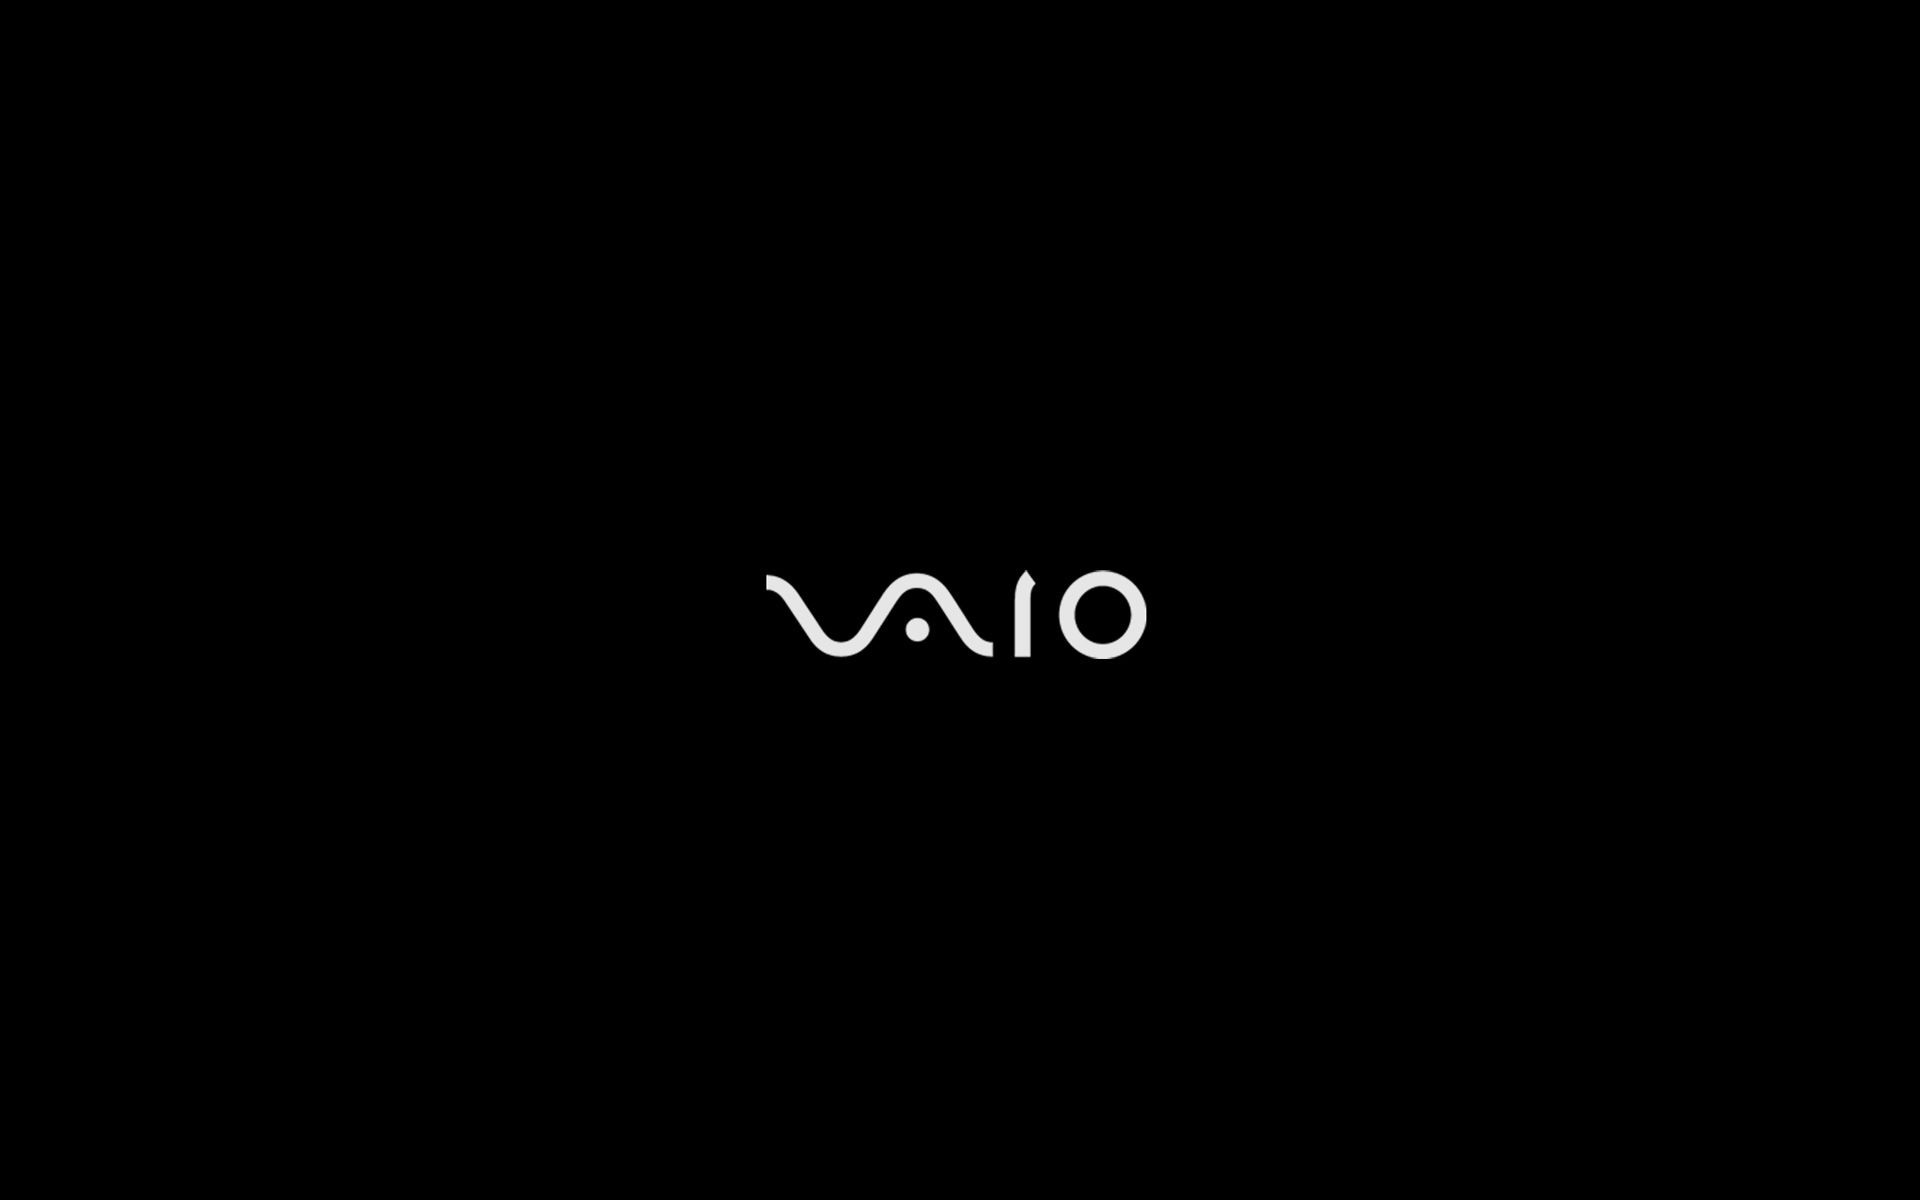 Sony Vaio Logo Wallpaper HD Jpg